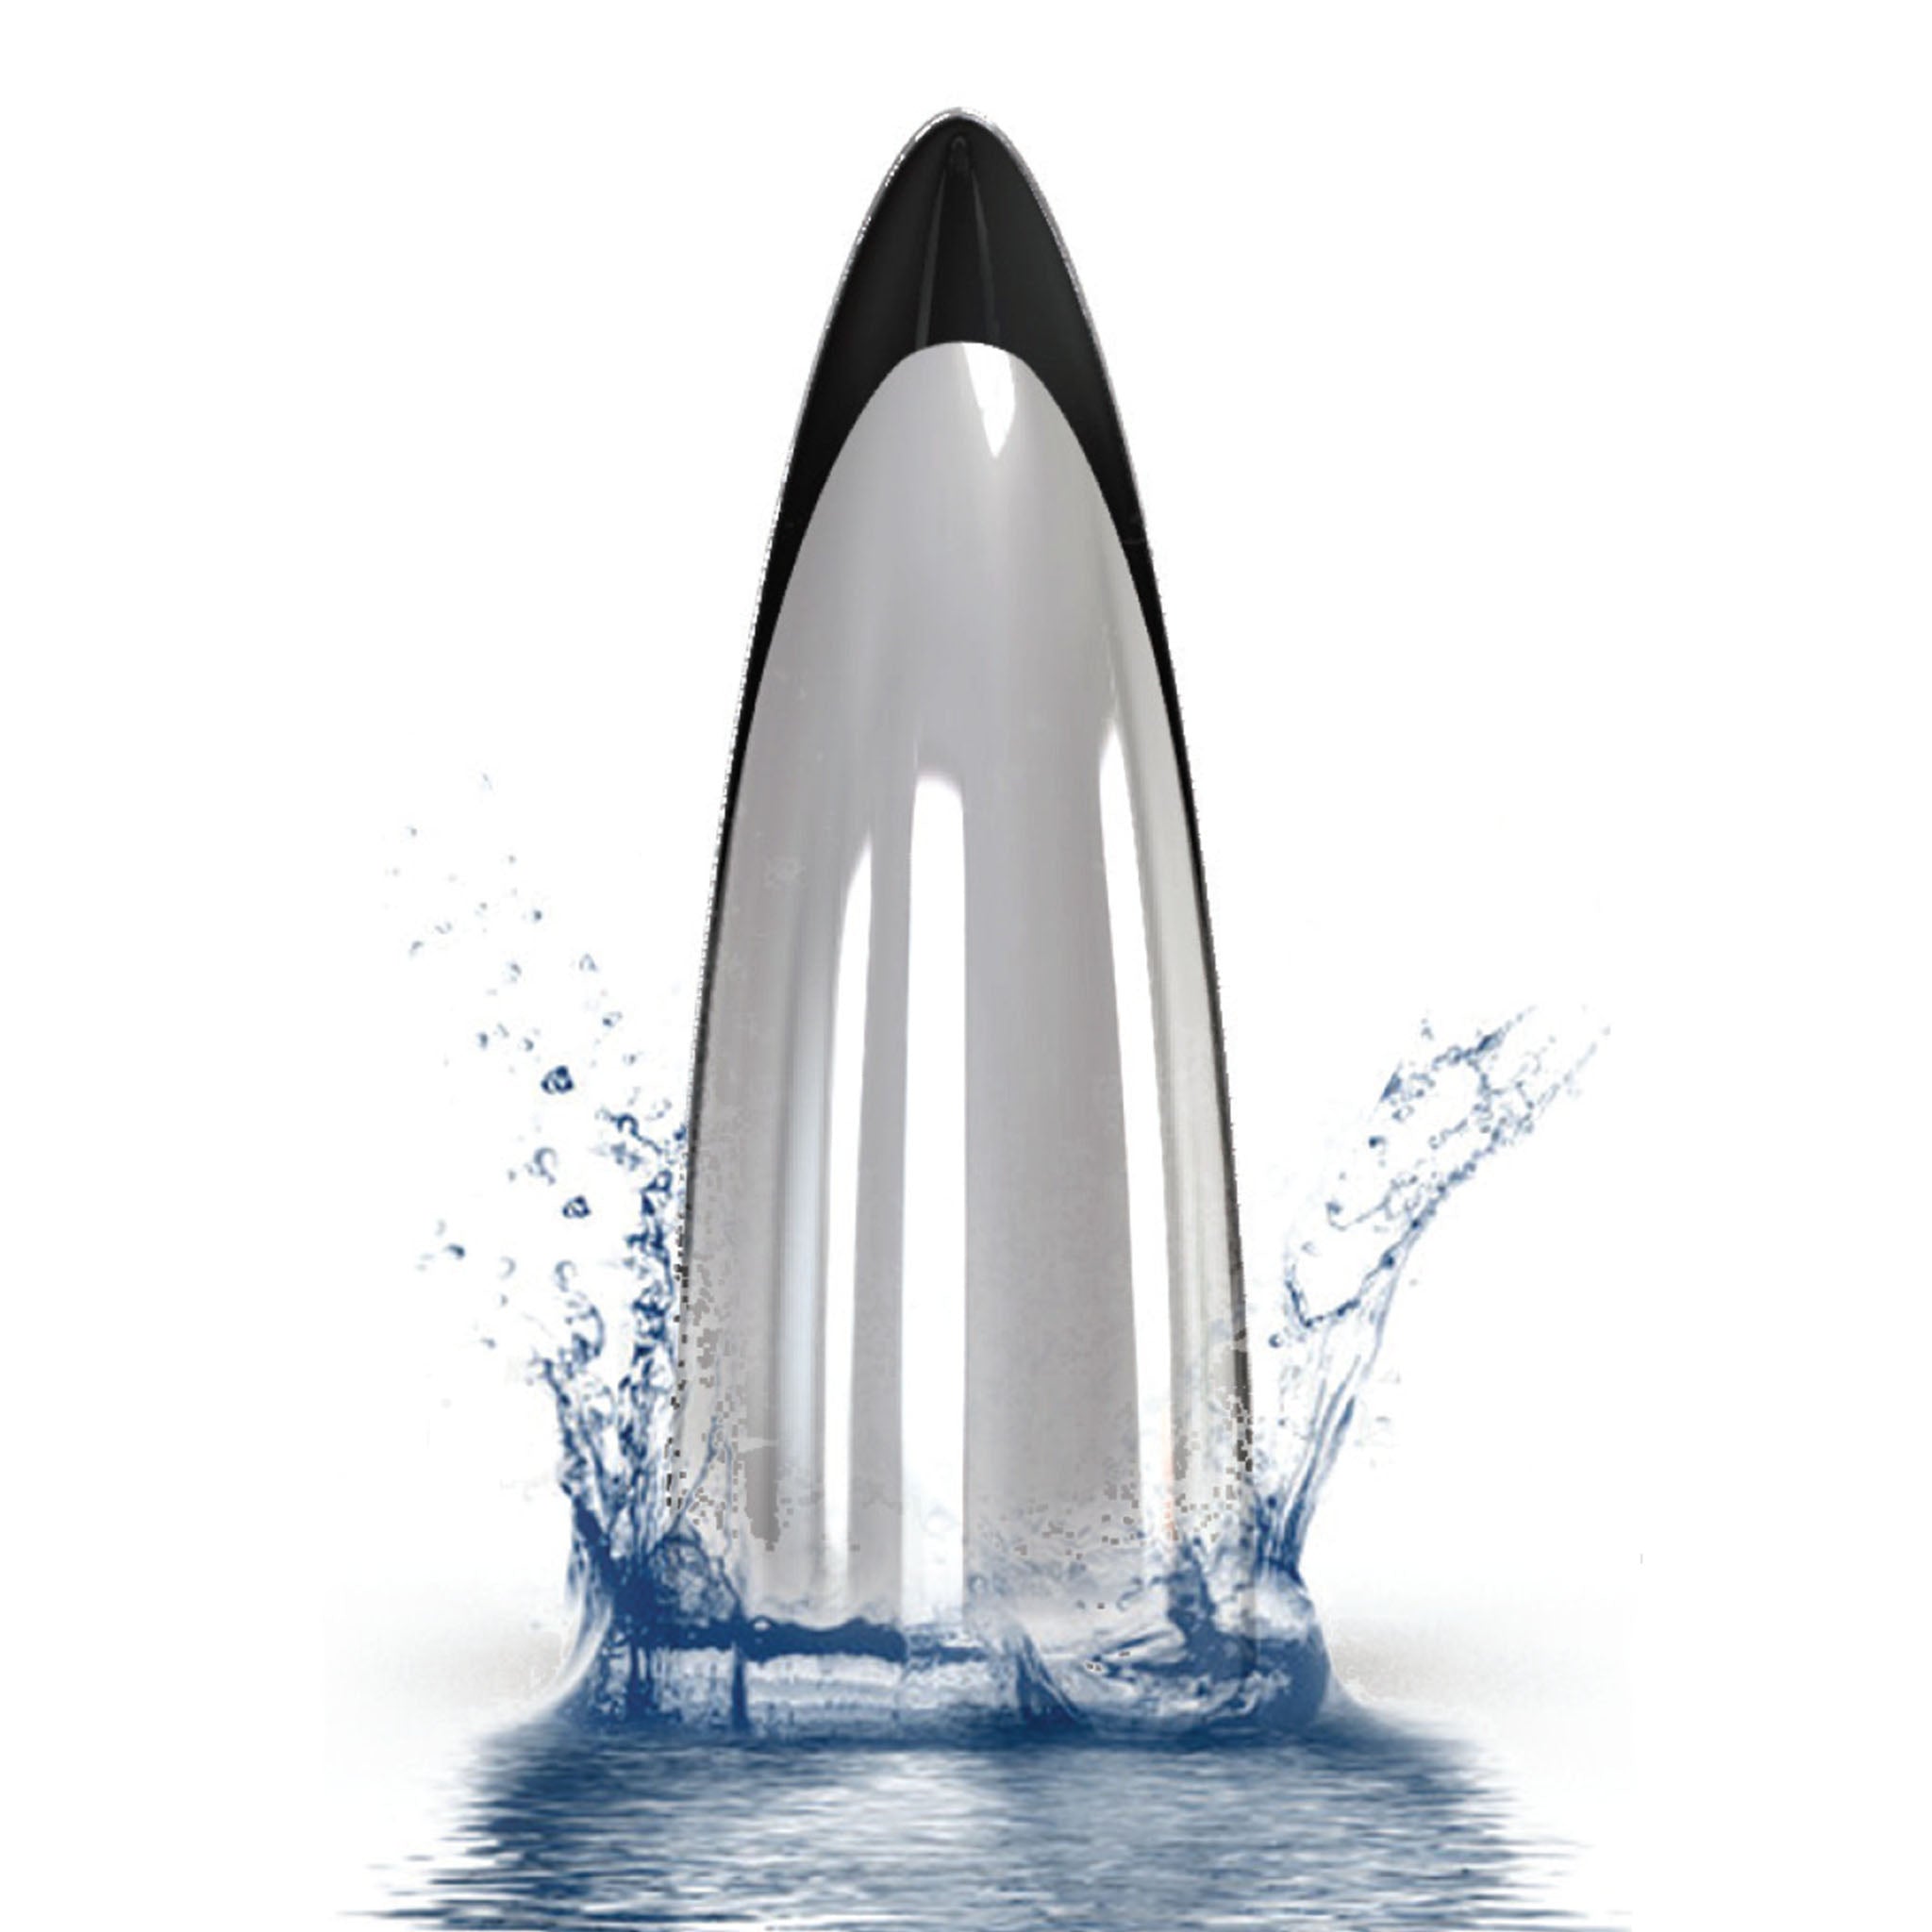  Vagnbys® 'Shark' Bottle Opener by Ethan+Ashe Ethan+Ashe Perfumarie